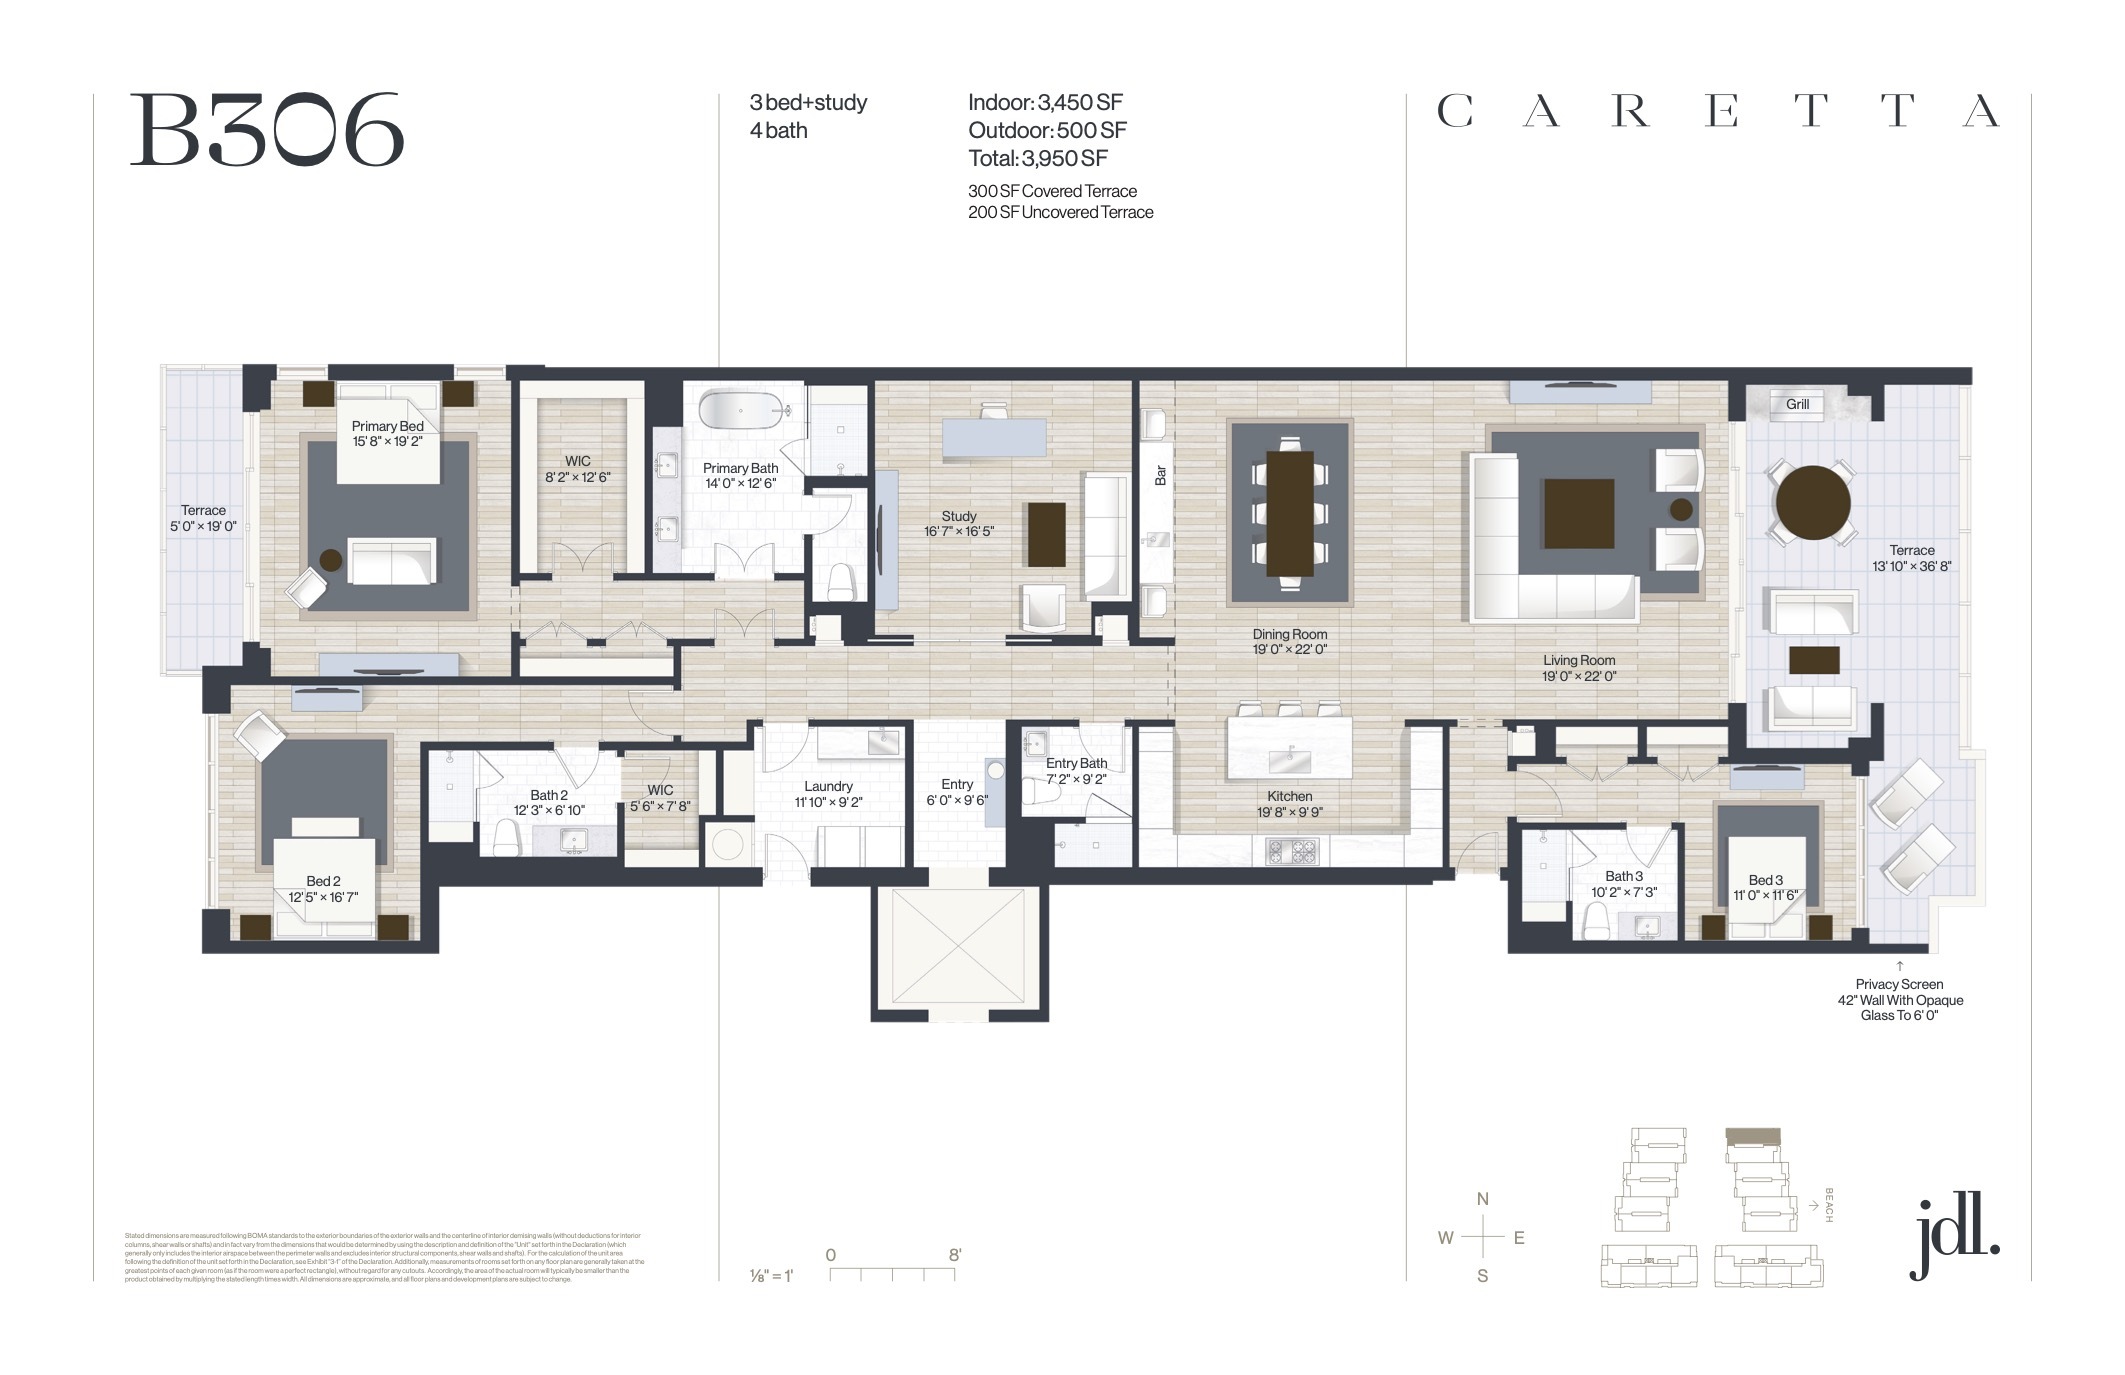 Floor Plan for Caretta Juno Beach Floorplans, B306